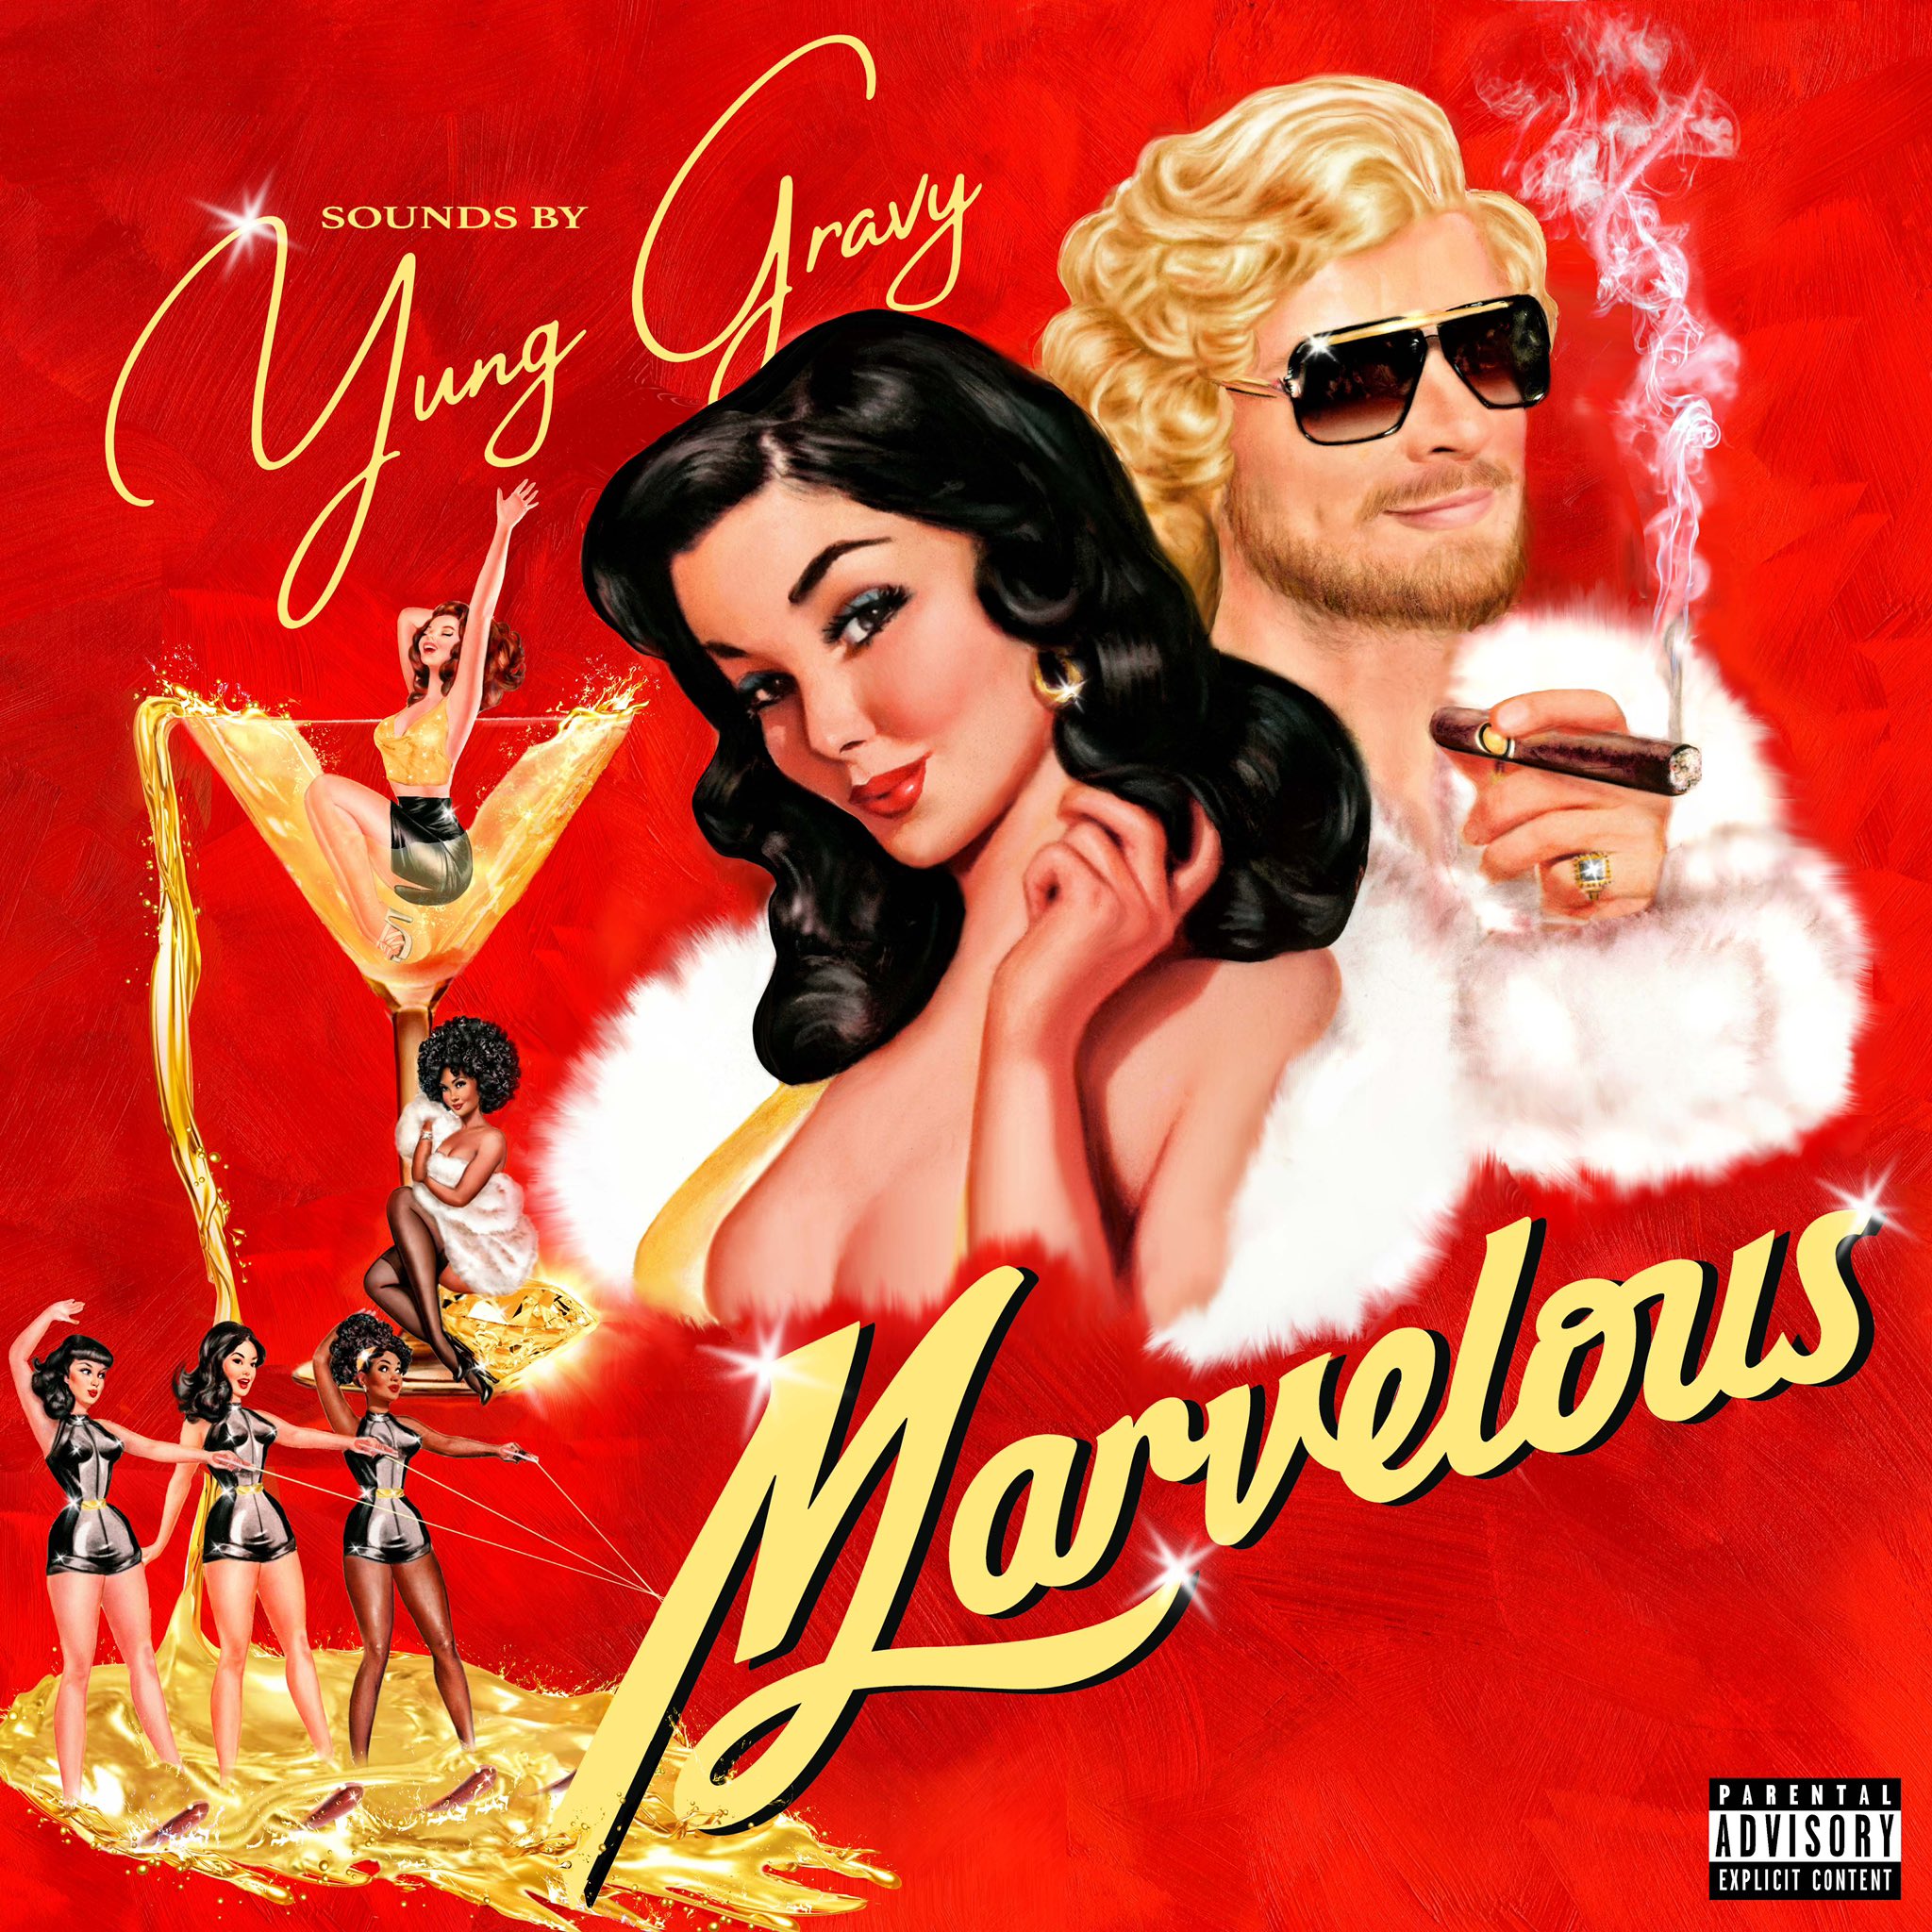 Yung Gravy – “Marvelous” [Album]